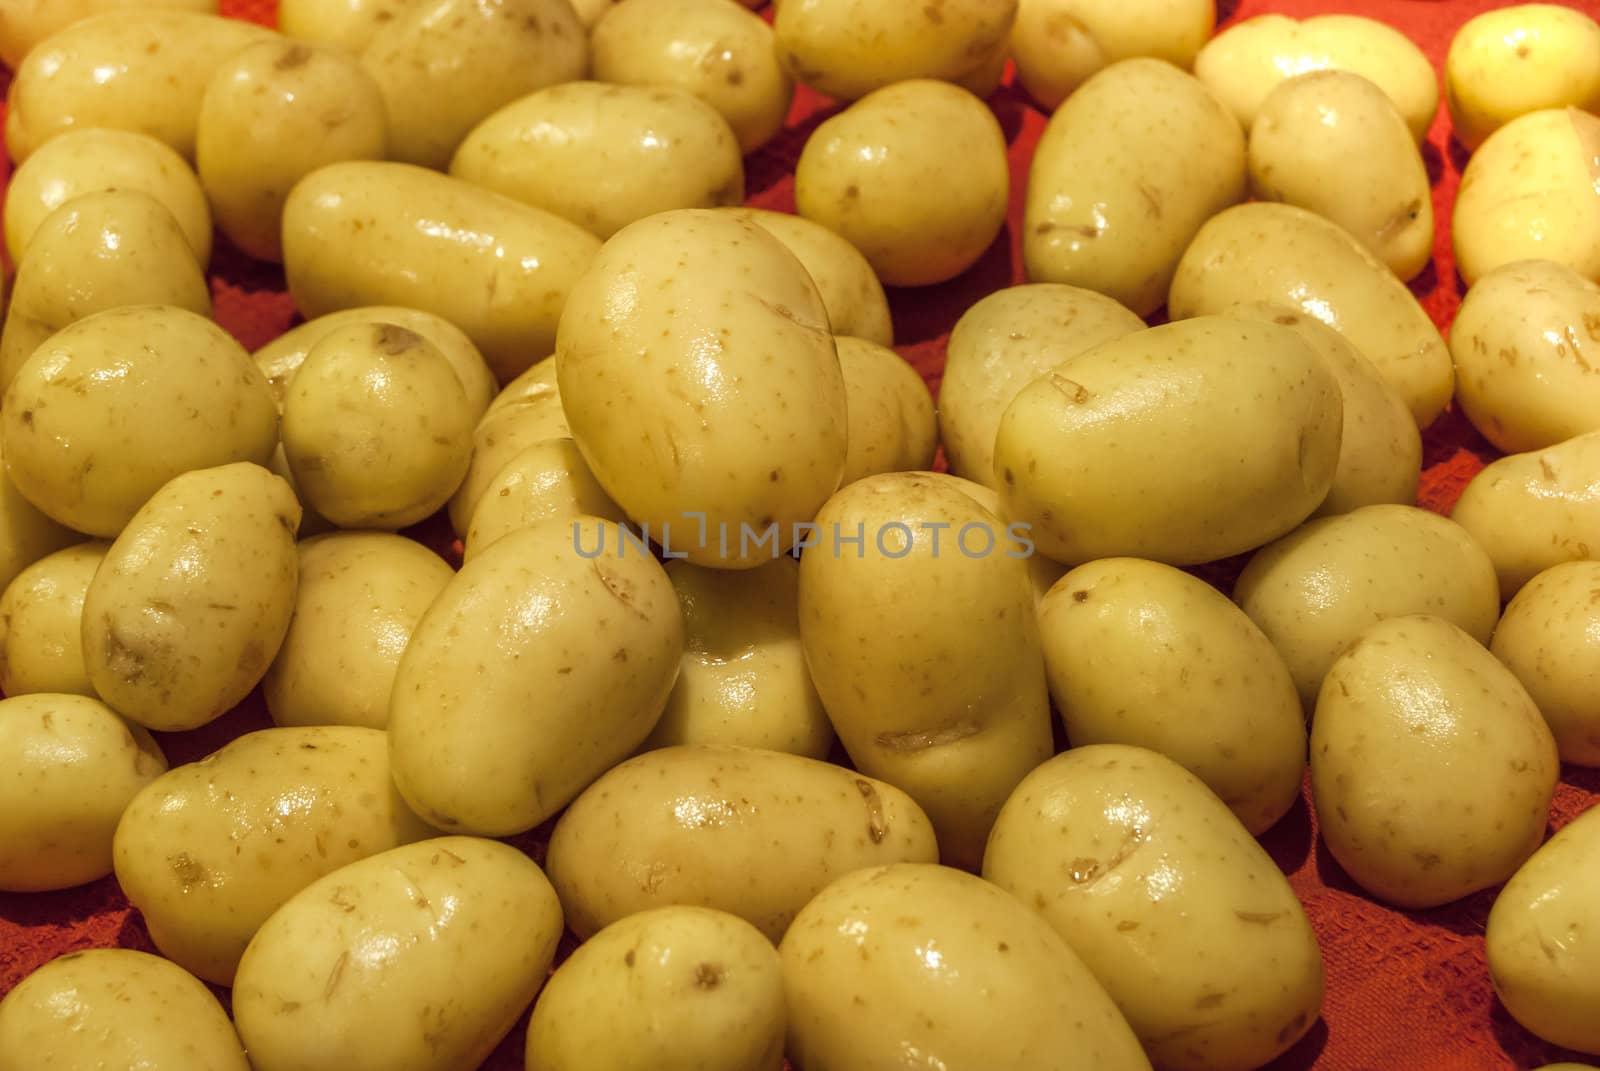 Washed fresh new potatoes by varbenov